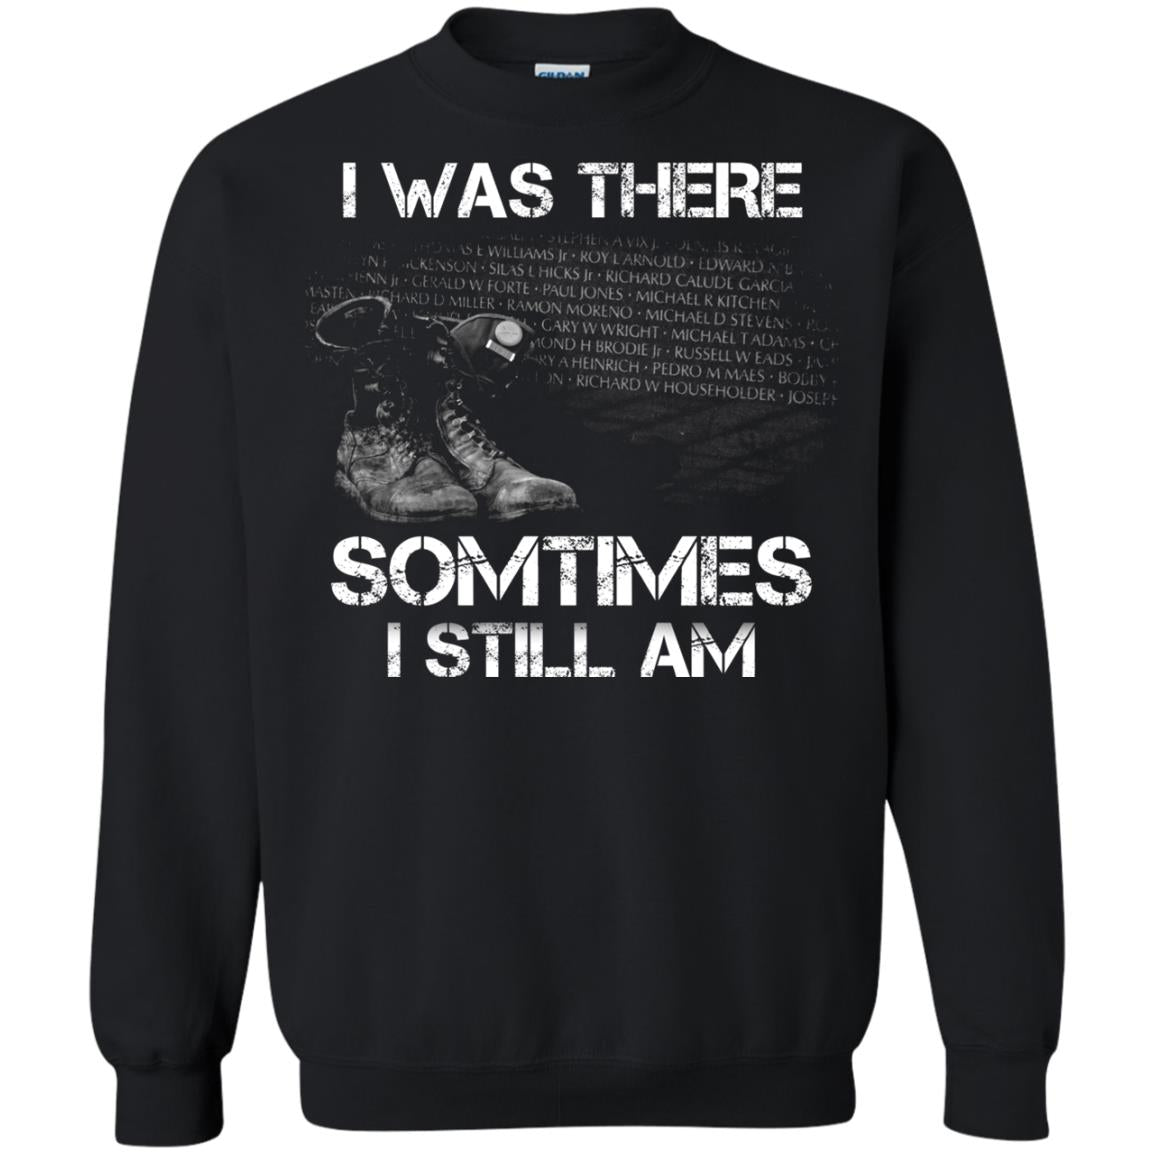 I Was There Sometimes I Still Am Military ShirtG180 Gildan Crewneck Pullover Sweatshirt 8 oz.